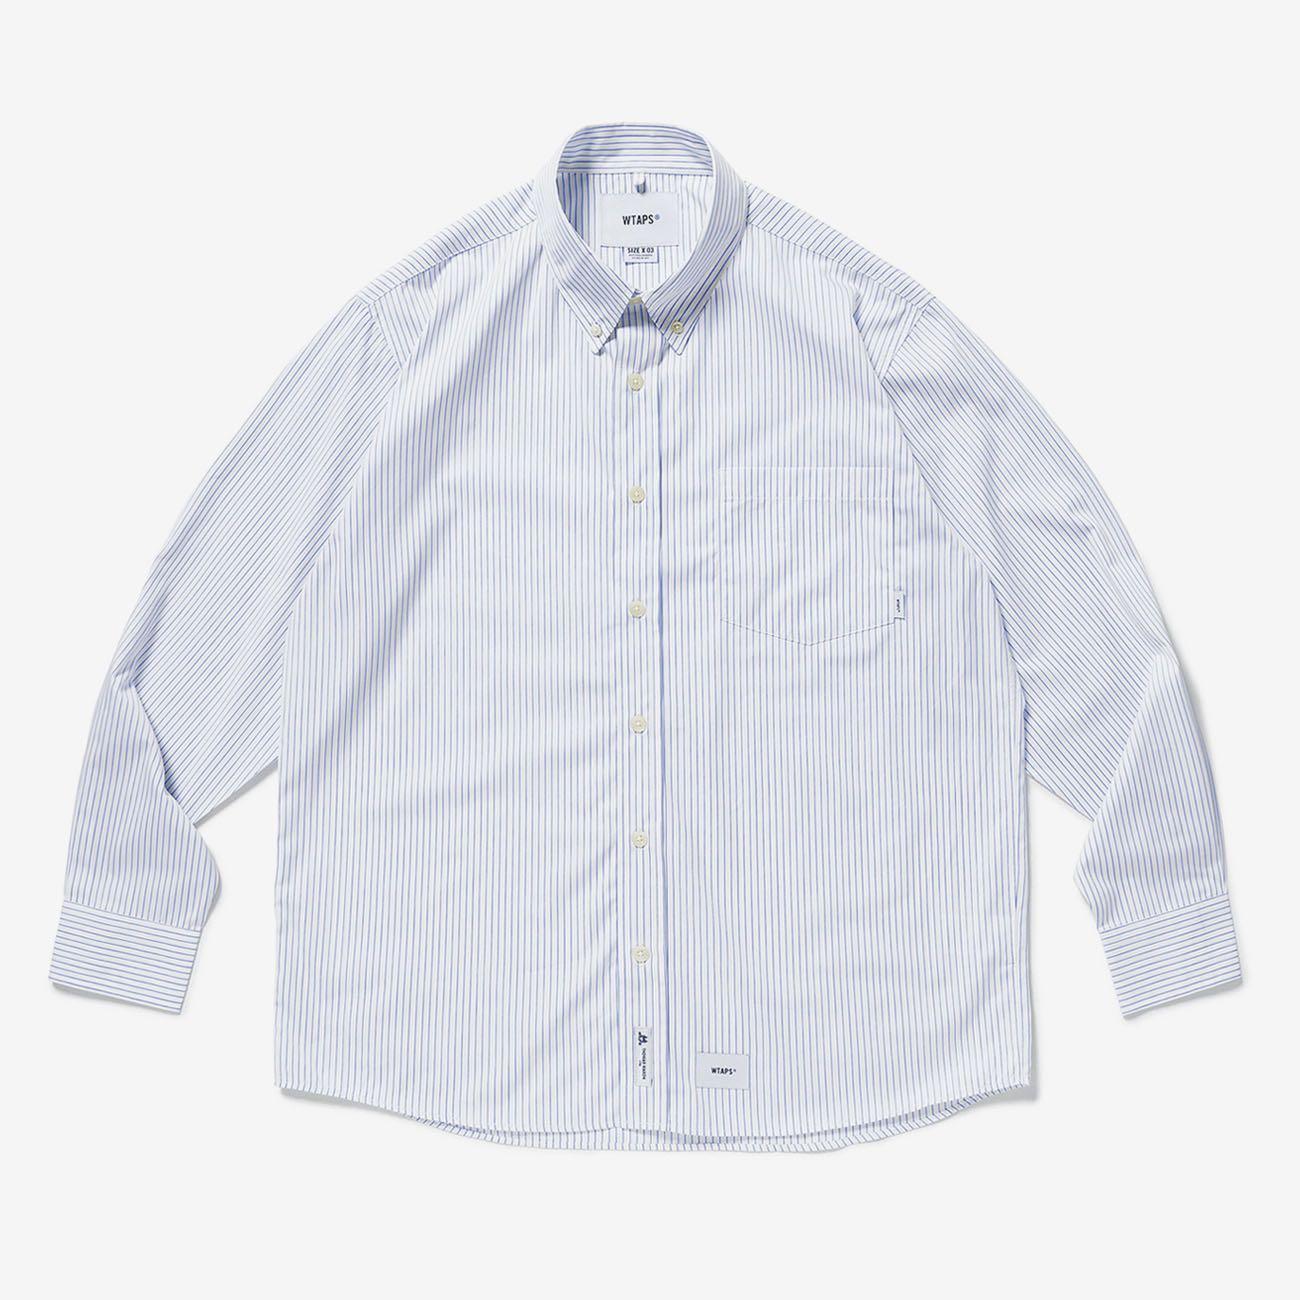 Wtaps 20ss Thomas mason shirt size 2 modular jungle wcpo